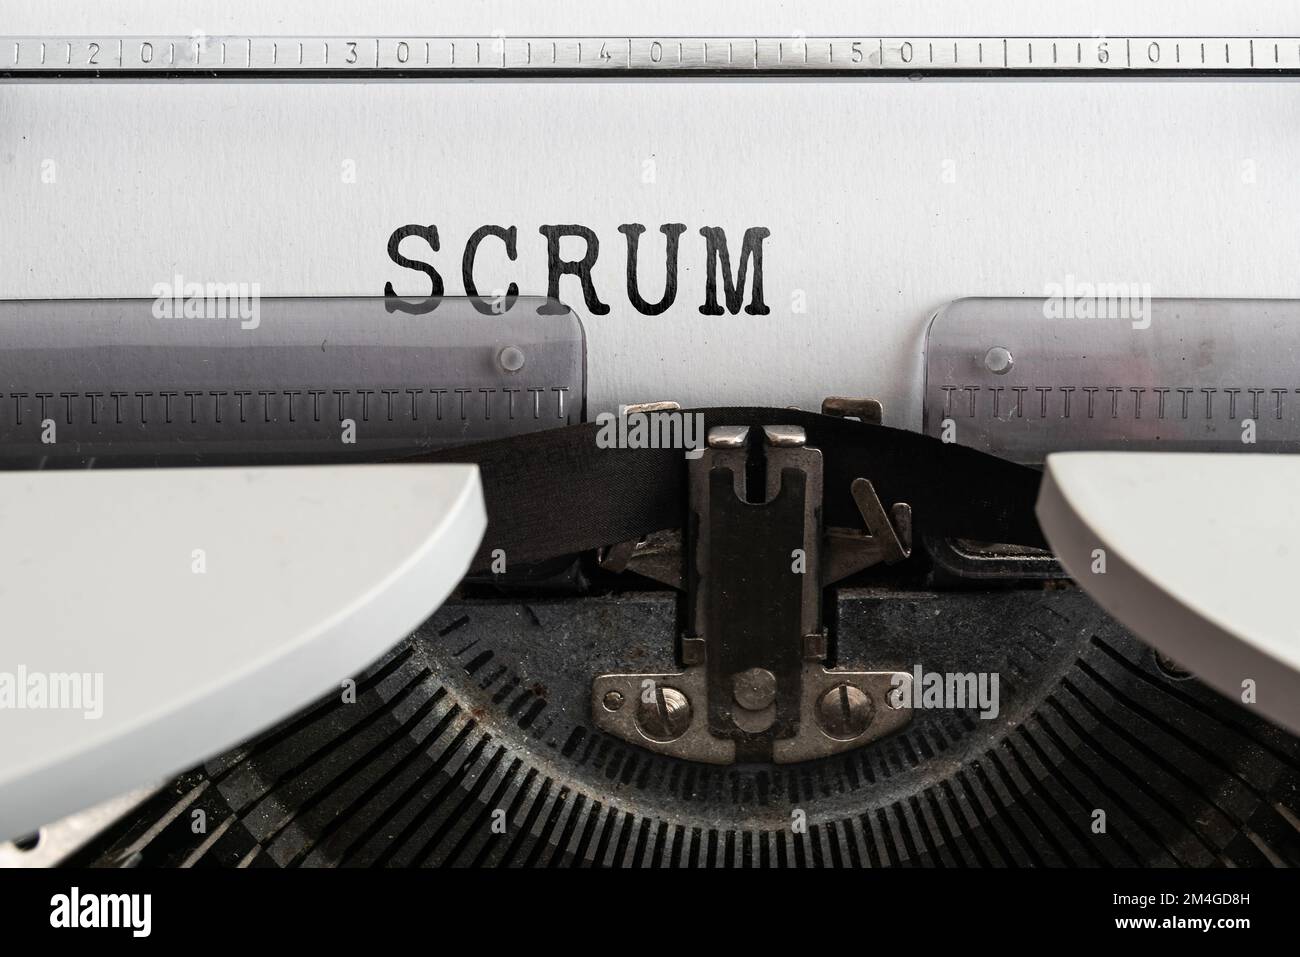 word SCRUM written on old typewriter, business concept Stock Photo